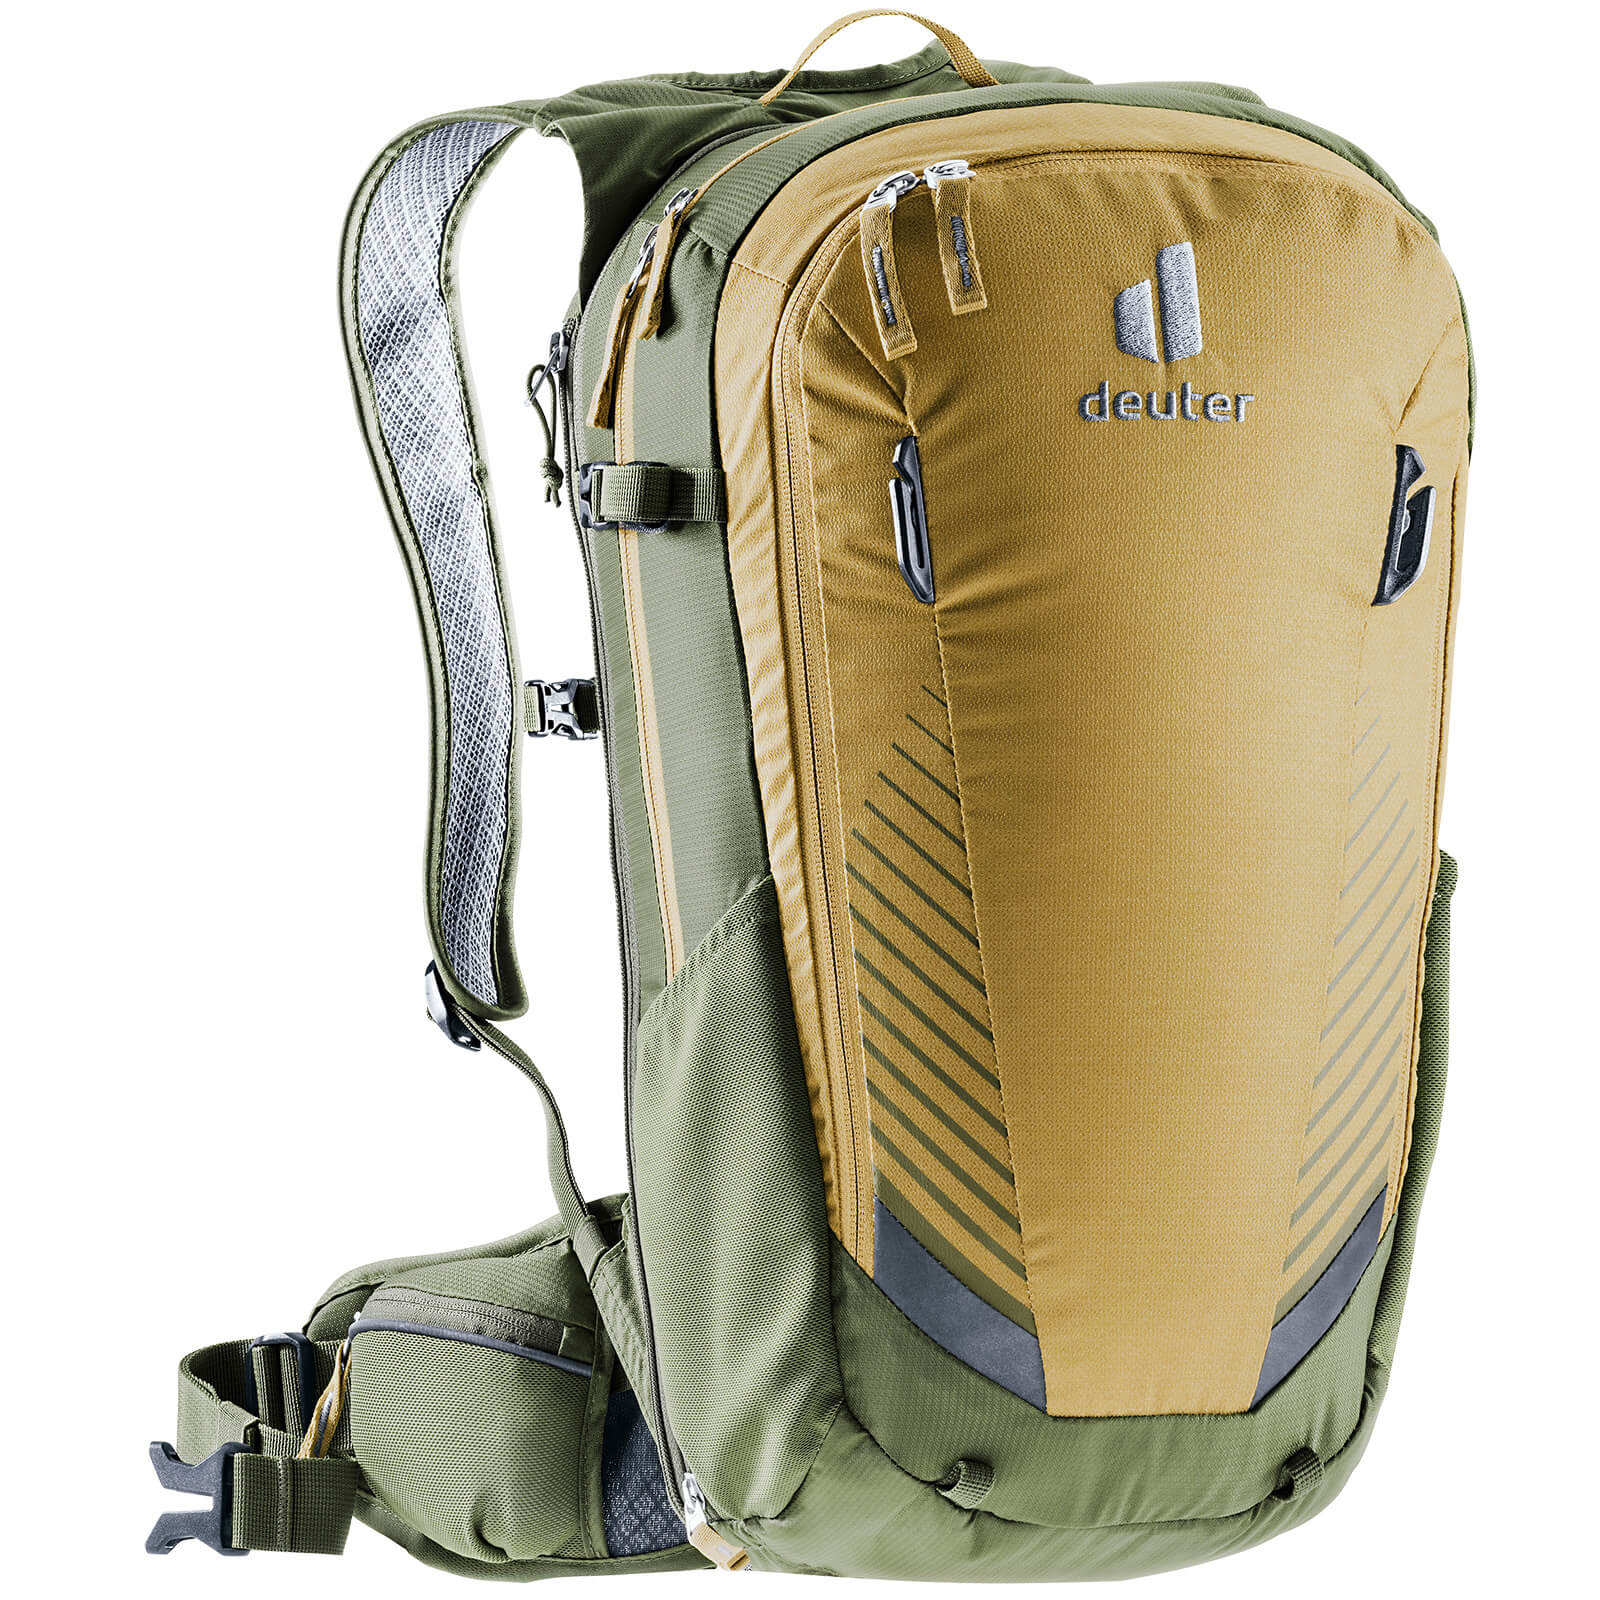 deuter Compact EXP 14 Backpack - Caramel-Khaki